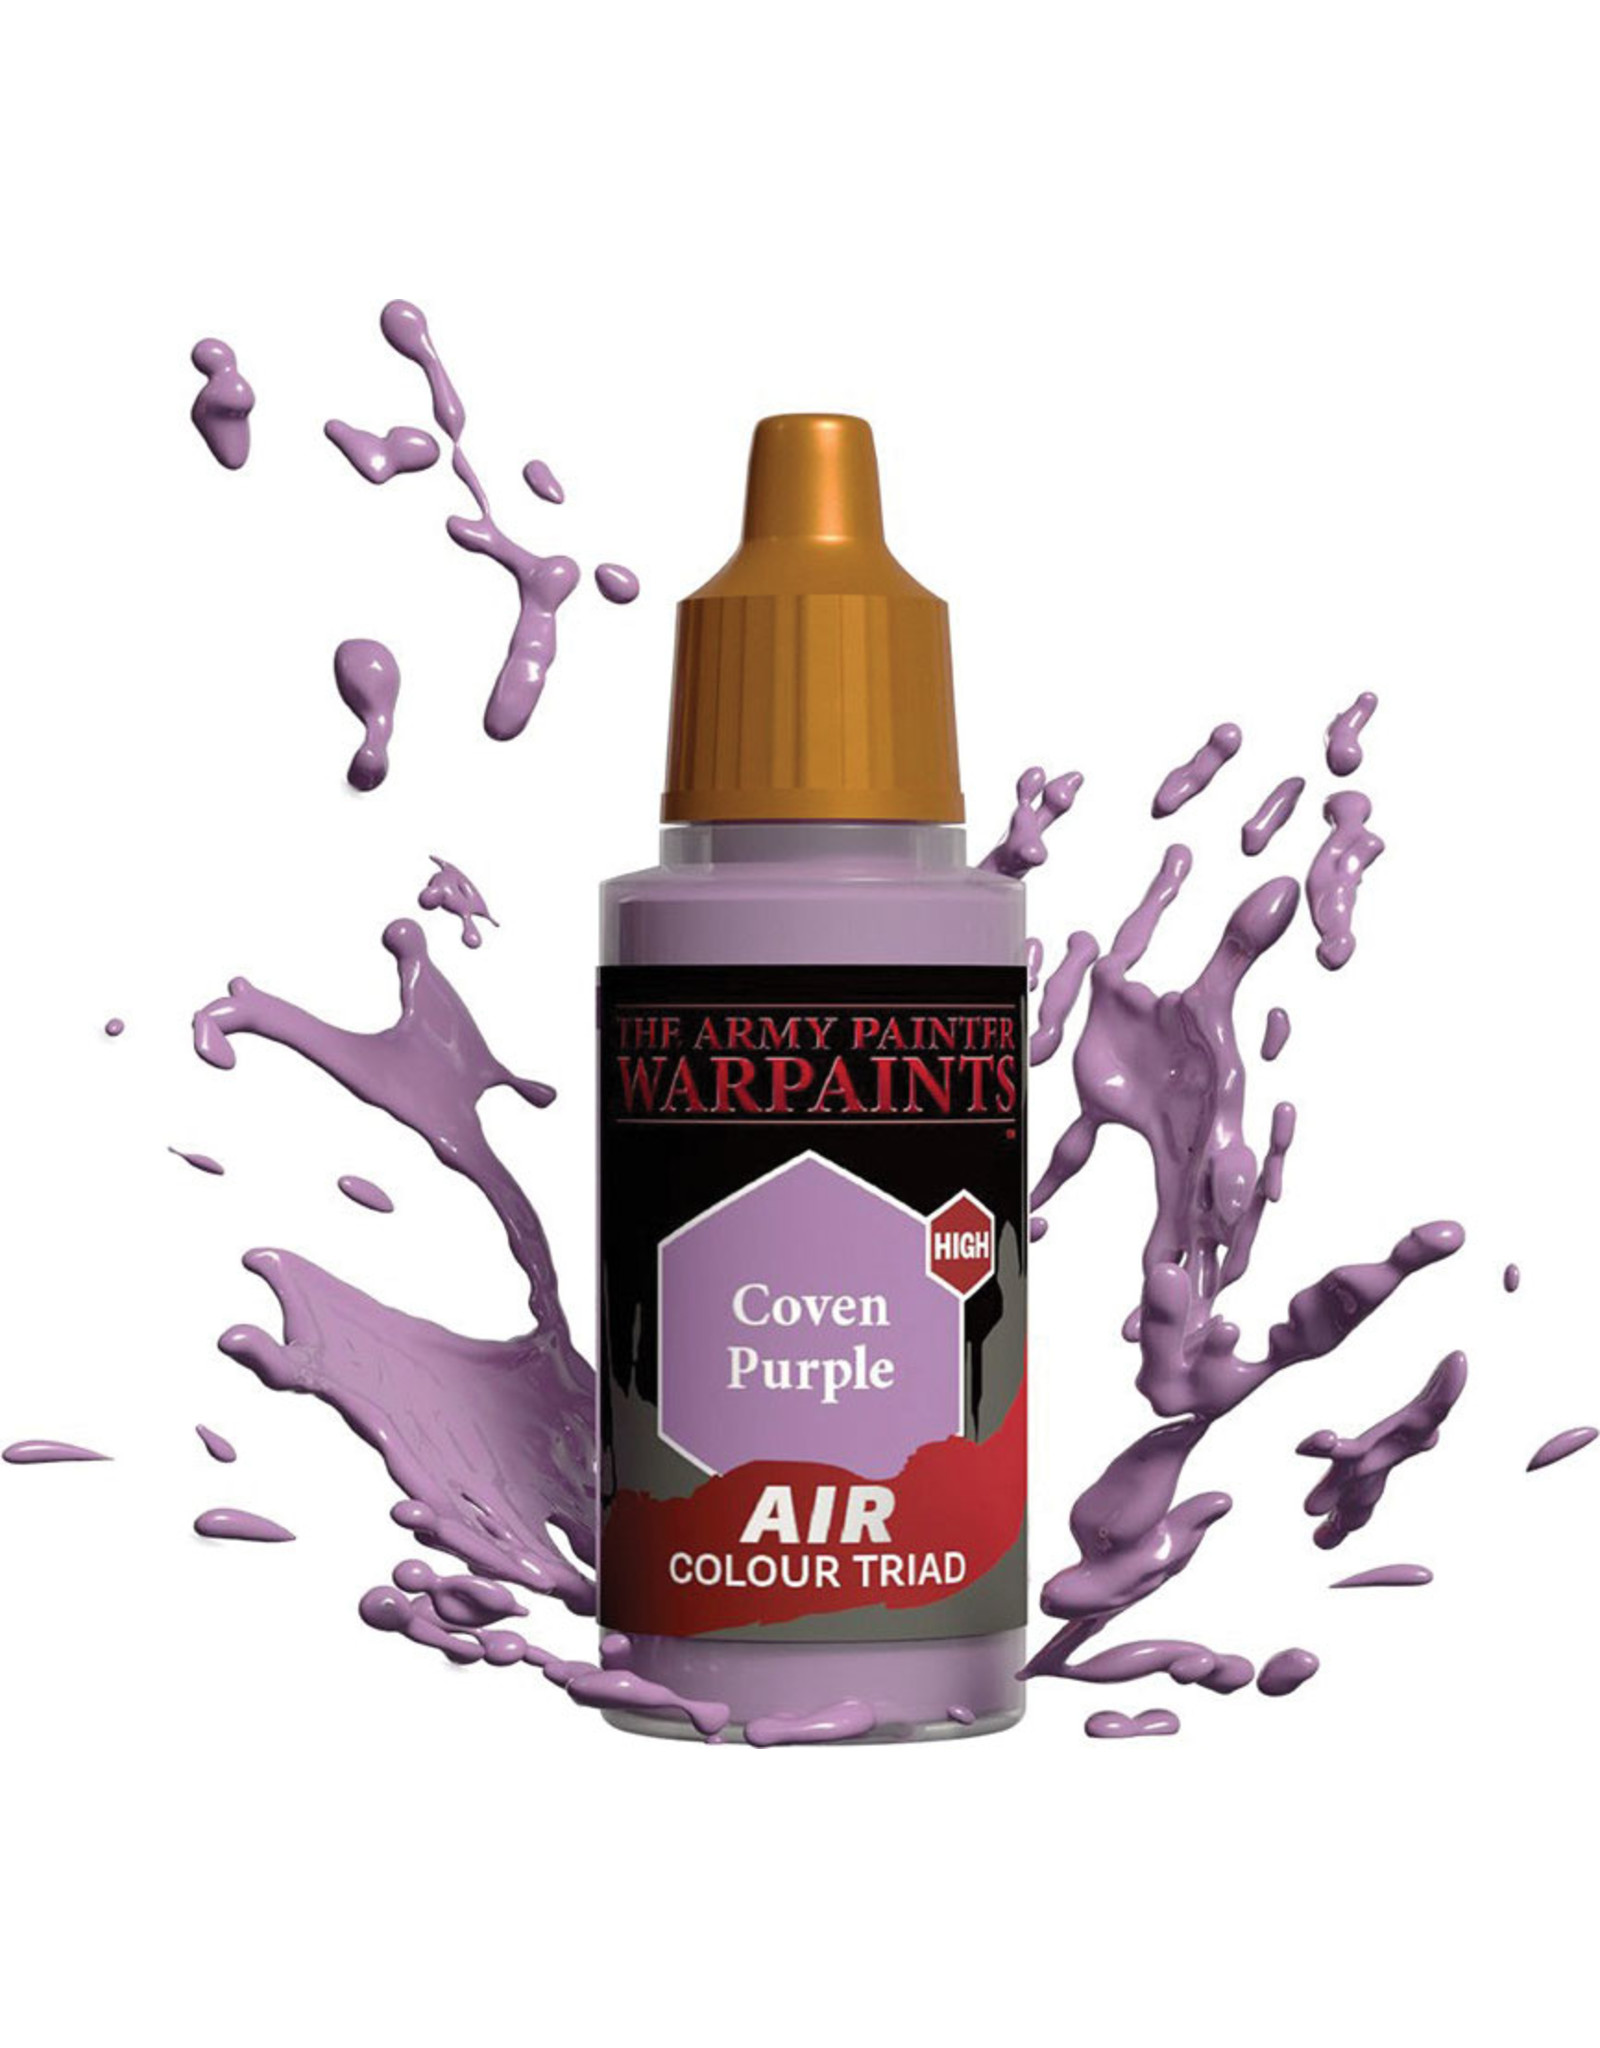 Army Painter Warpaint Air: Coven Purple, 18ml.